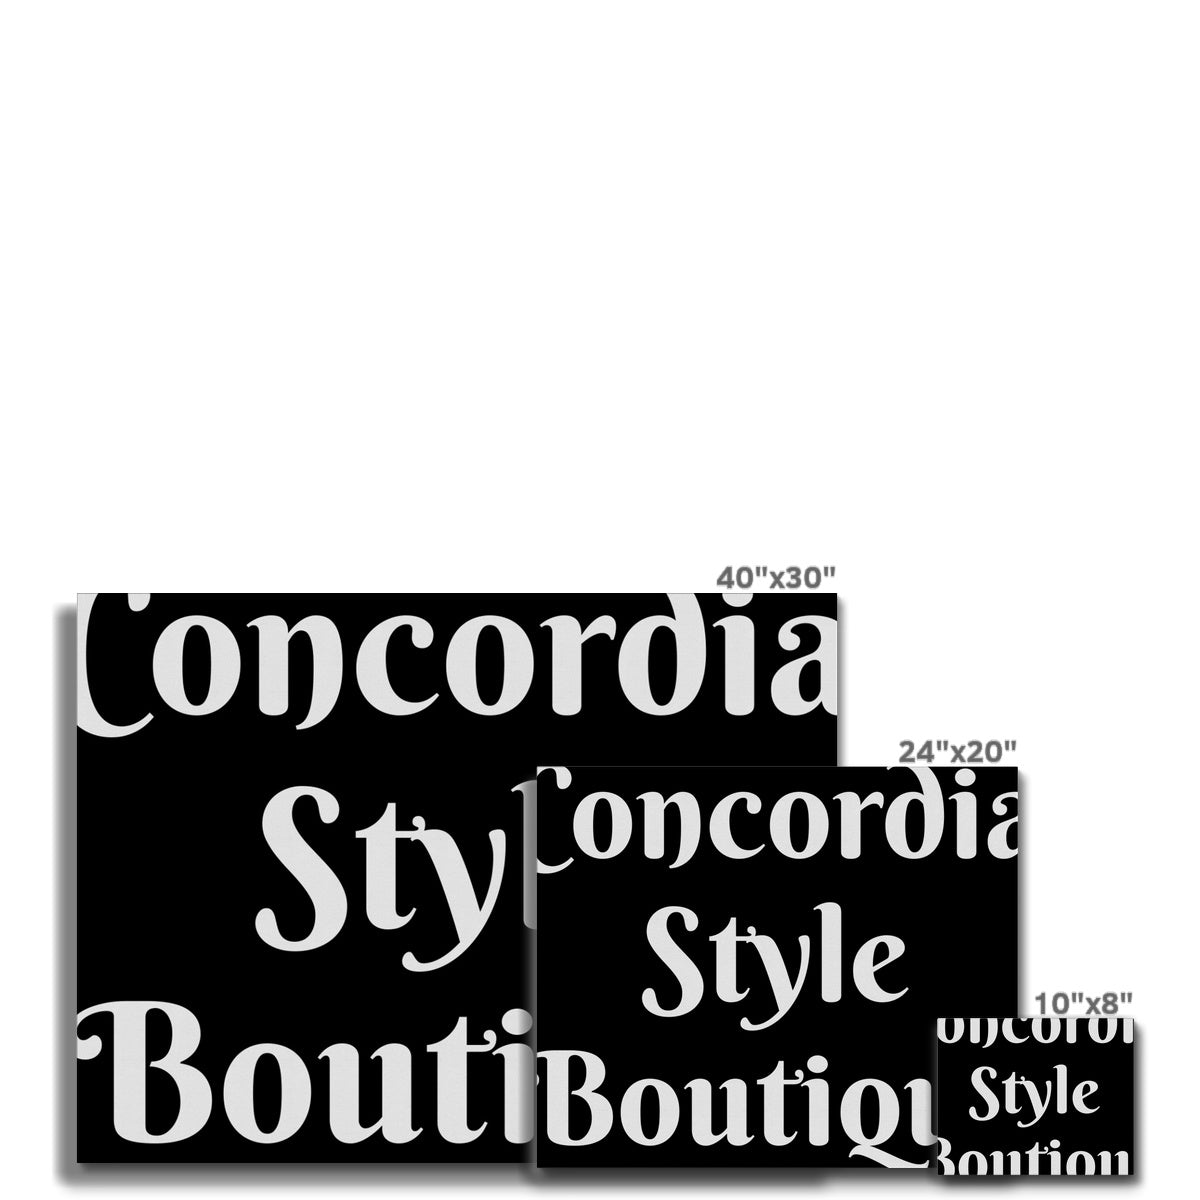 Concordia Style Boutique Canvas - Premium Fine art from Prodigi - Just $20.80! Shop now at Concordia Style Boutique